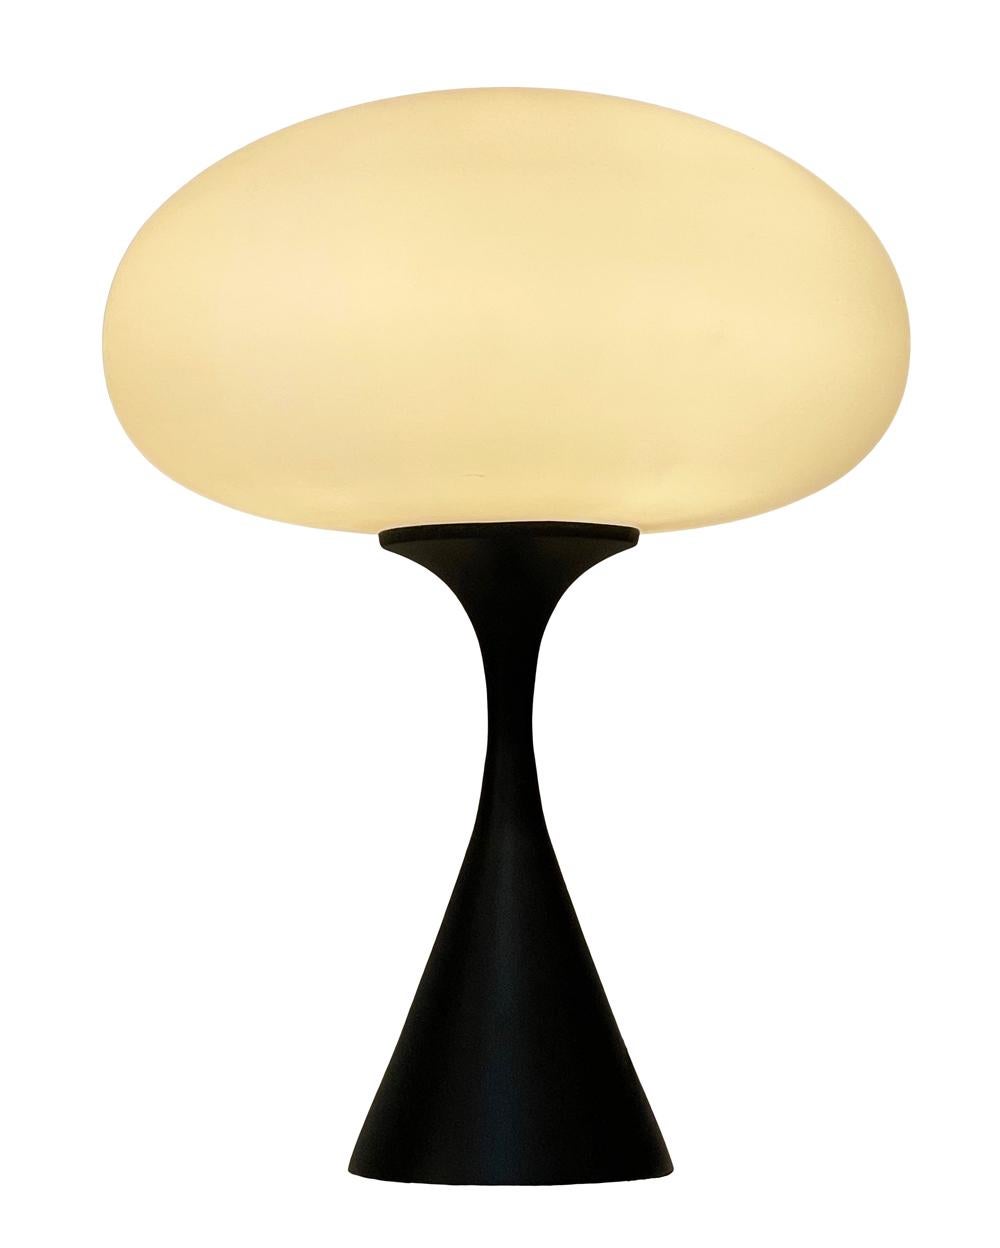 Indian Mid-Century Modern Mushroom Table Lamp by Designline in Black & White For Sale